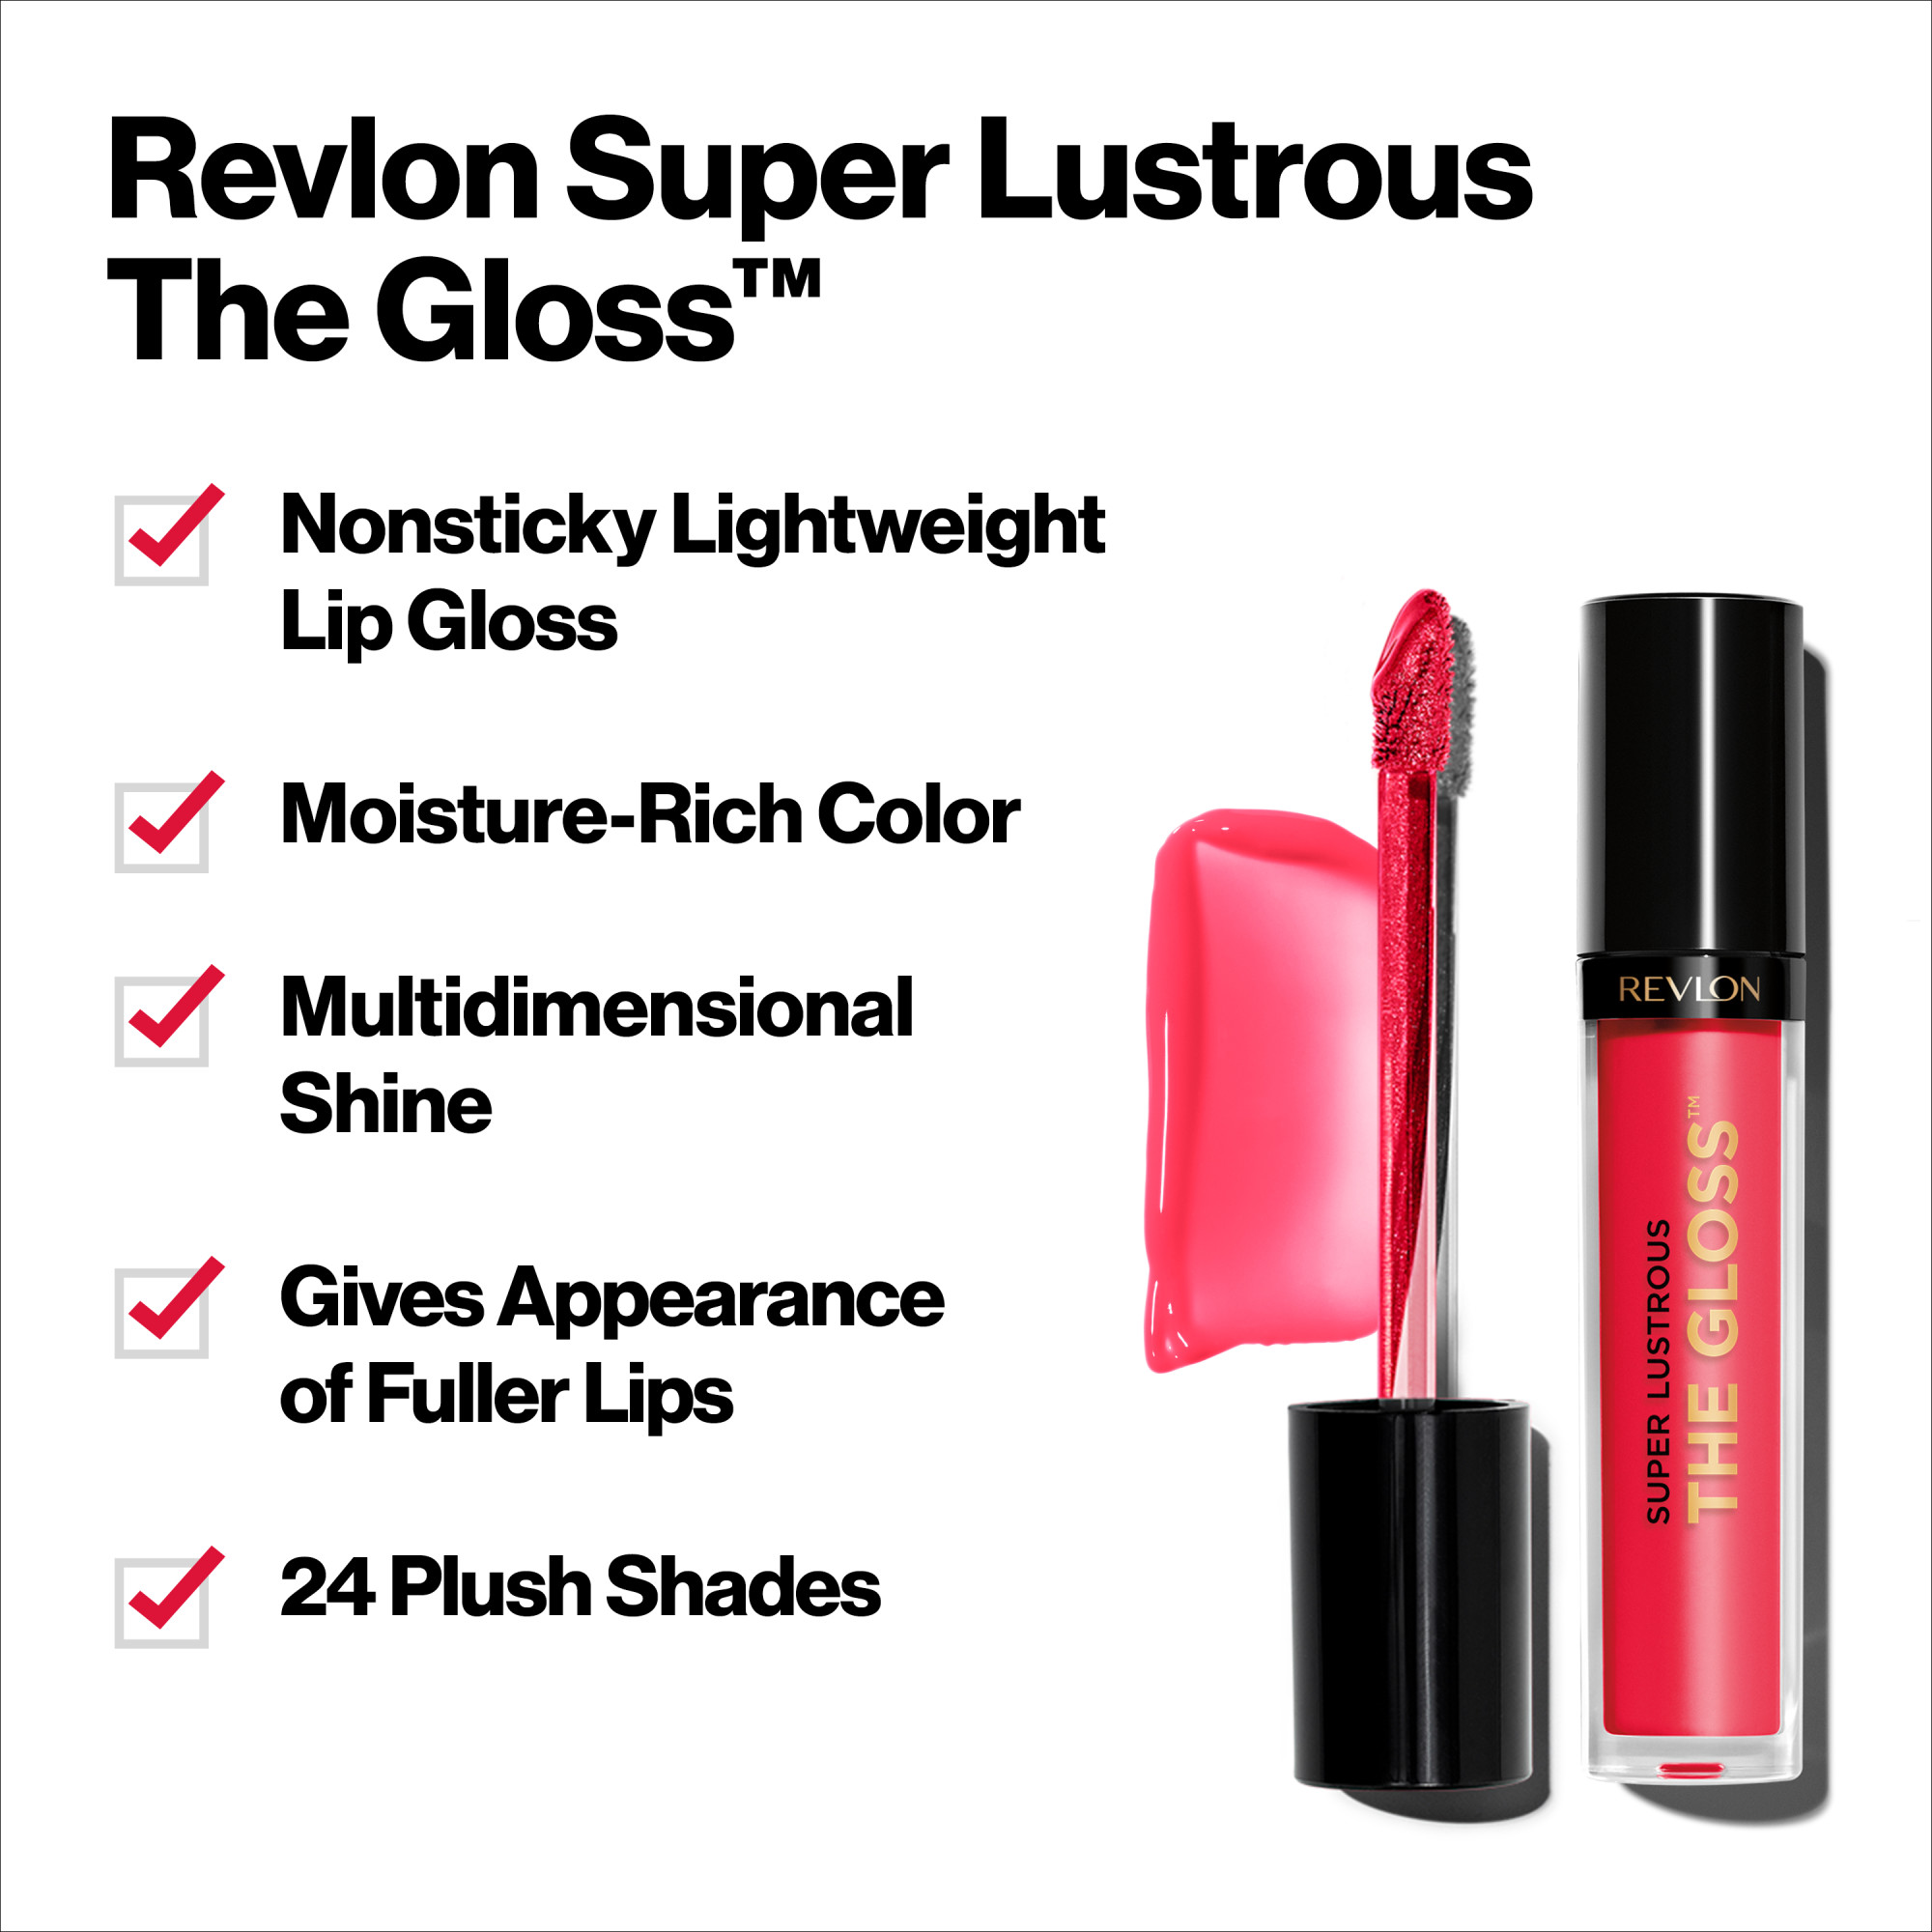 Revlon Super Lustrous Moisturizing High Shine Lip Gloss, 310 Choco Crush, 0.13 oz - image 4 of 9